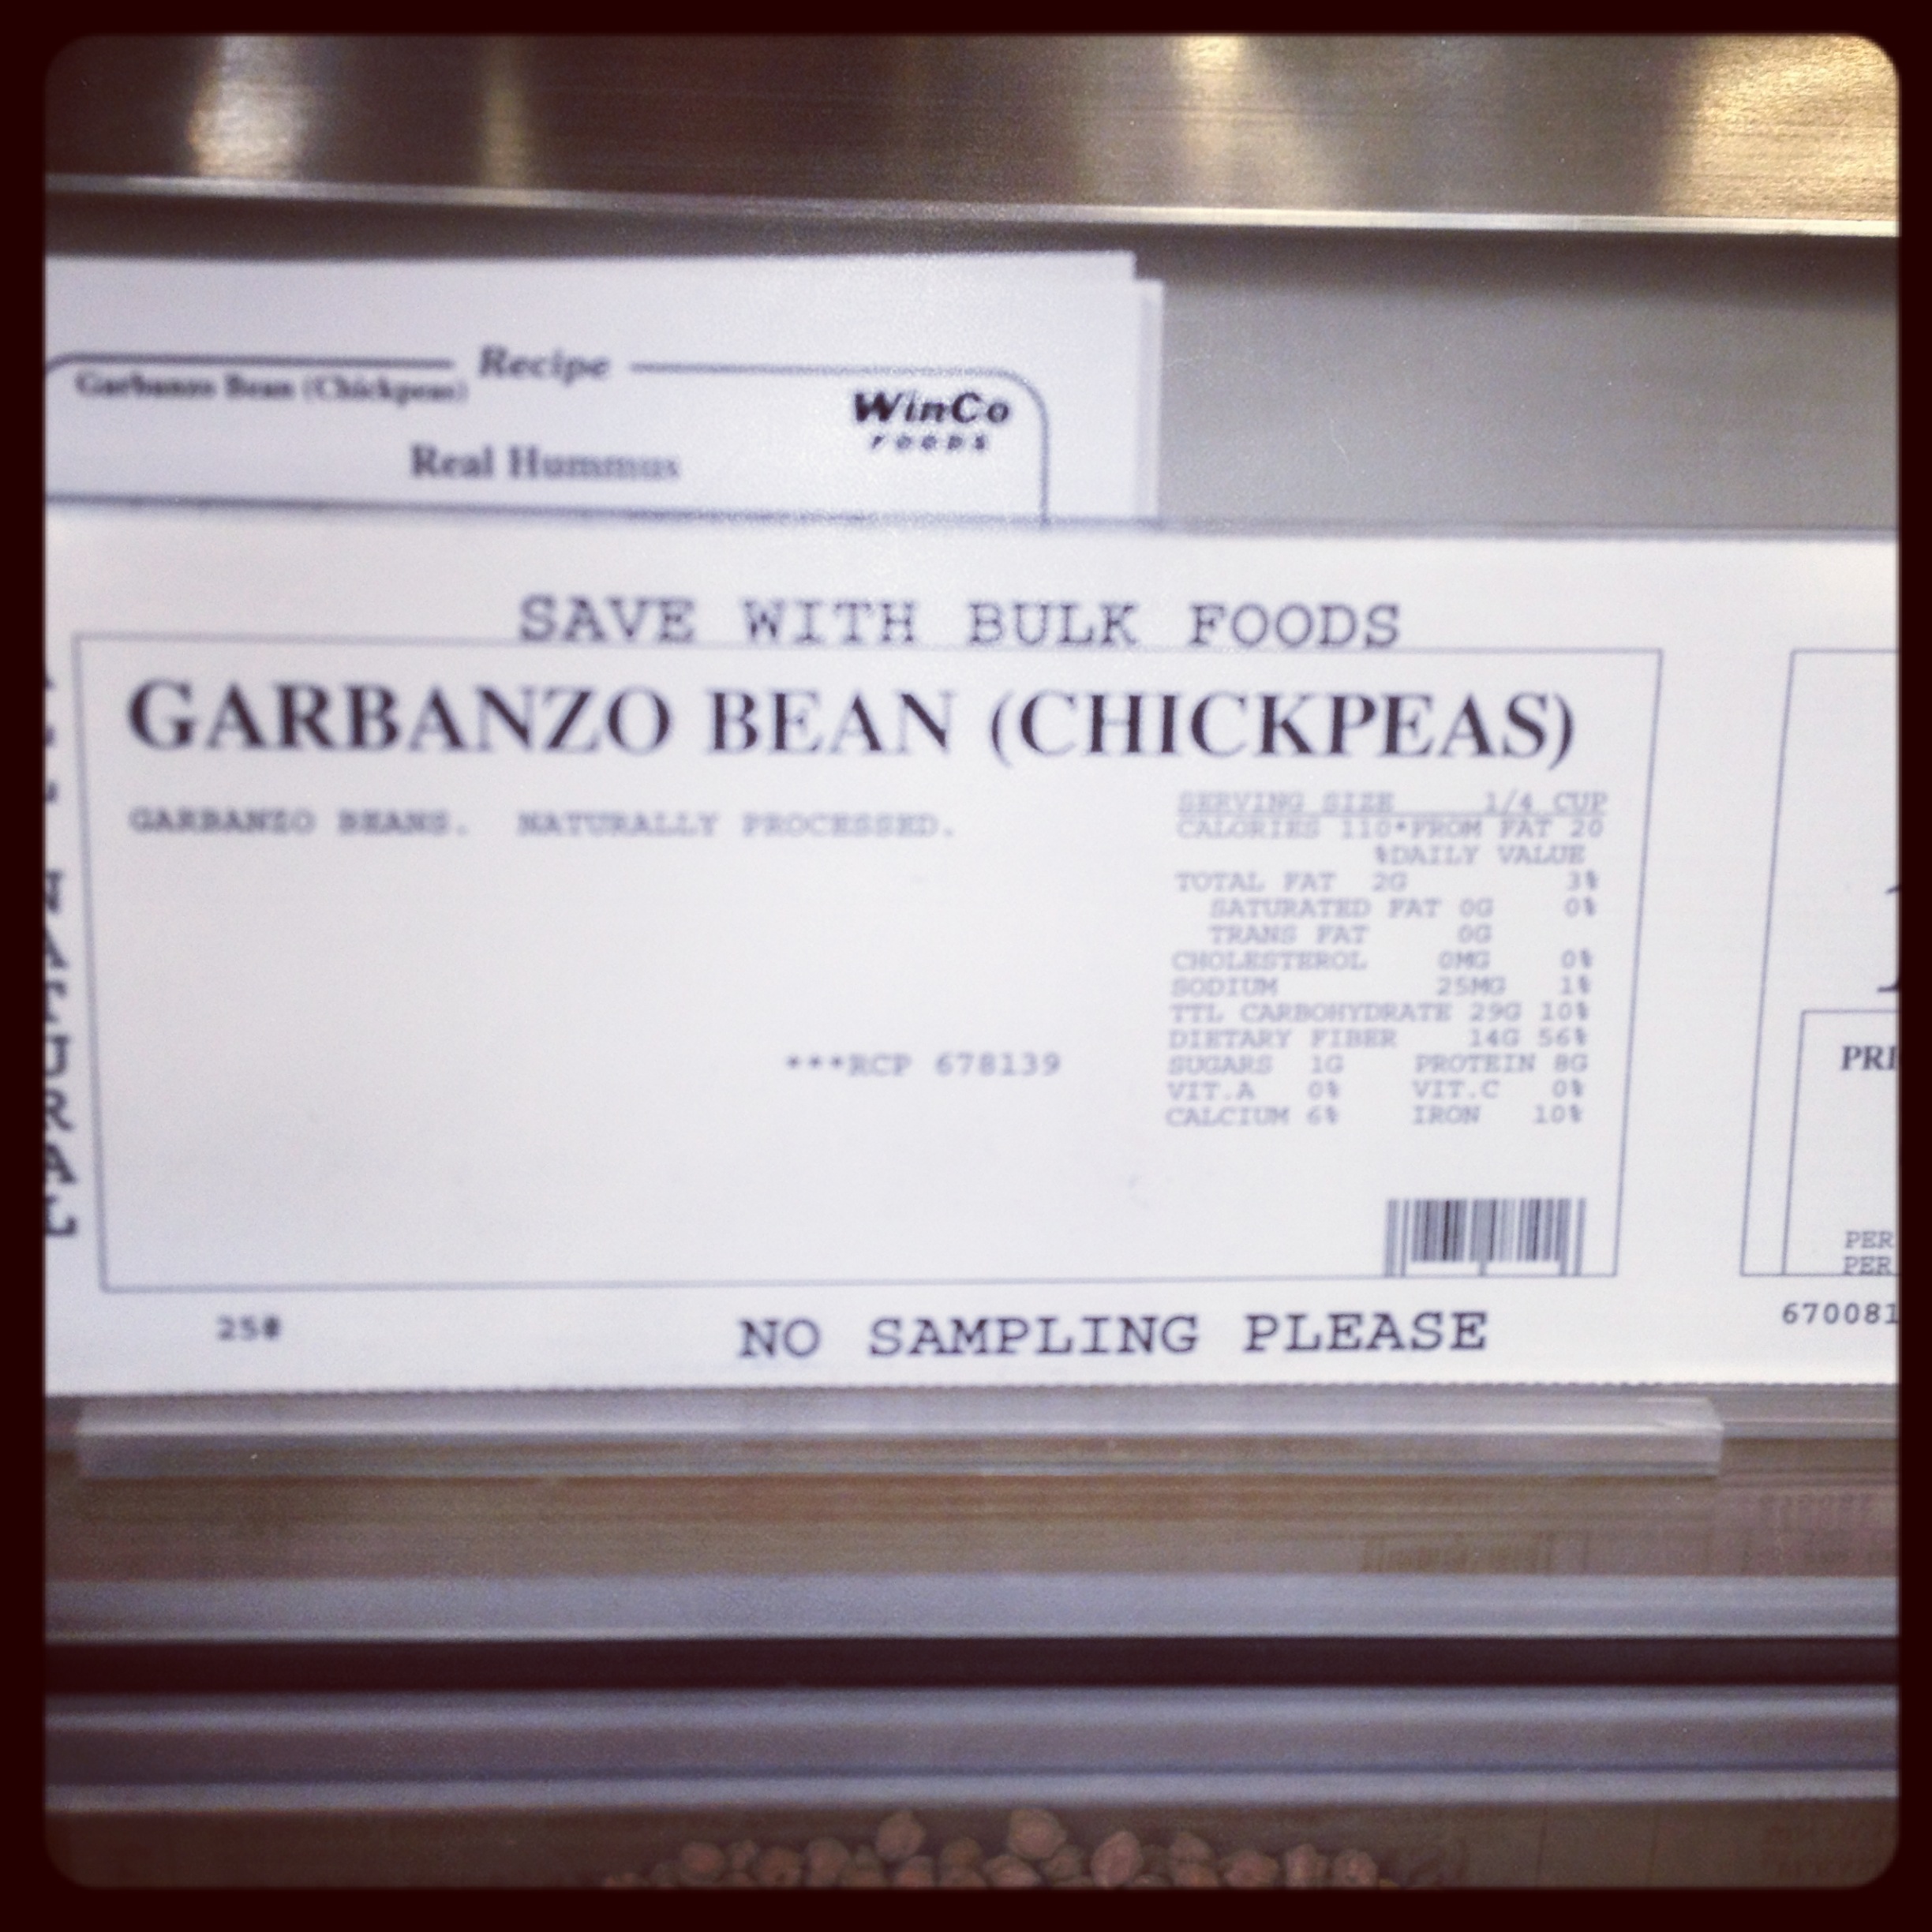 Garbonzo beans